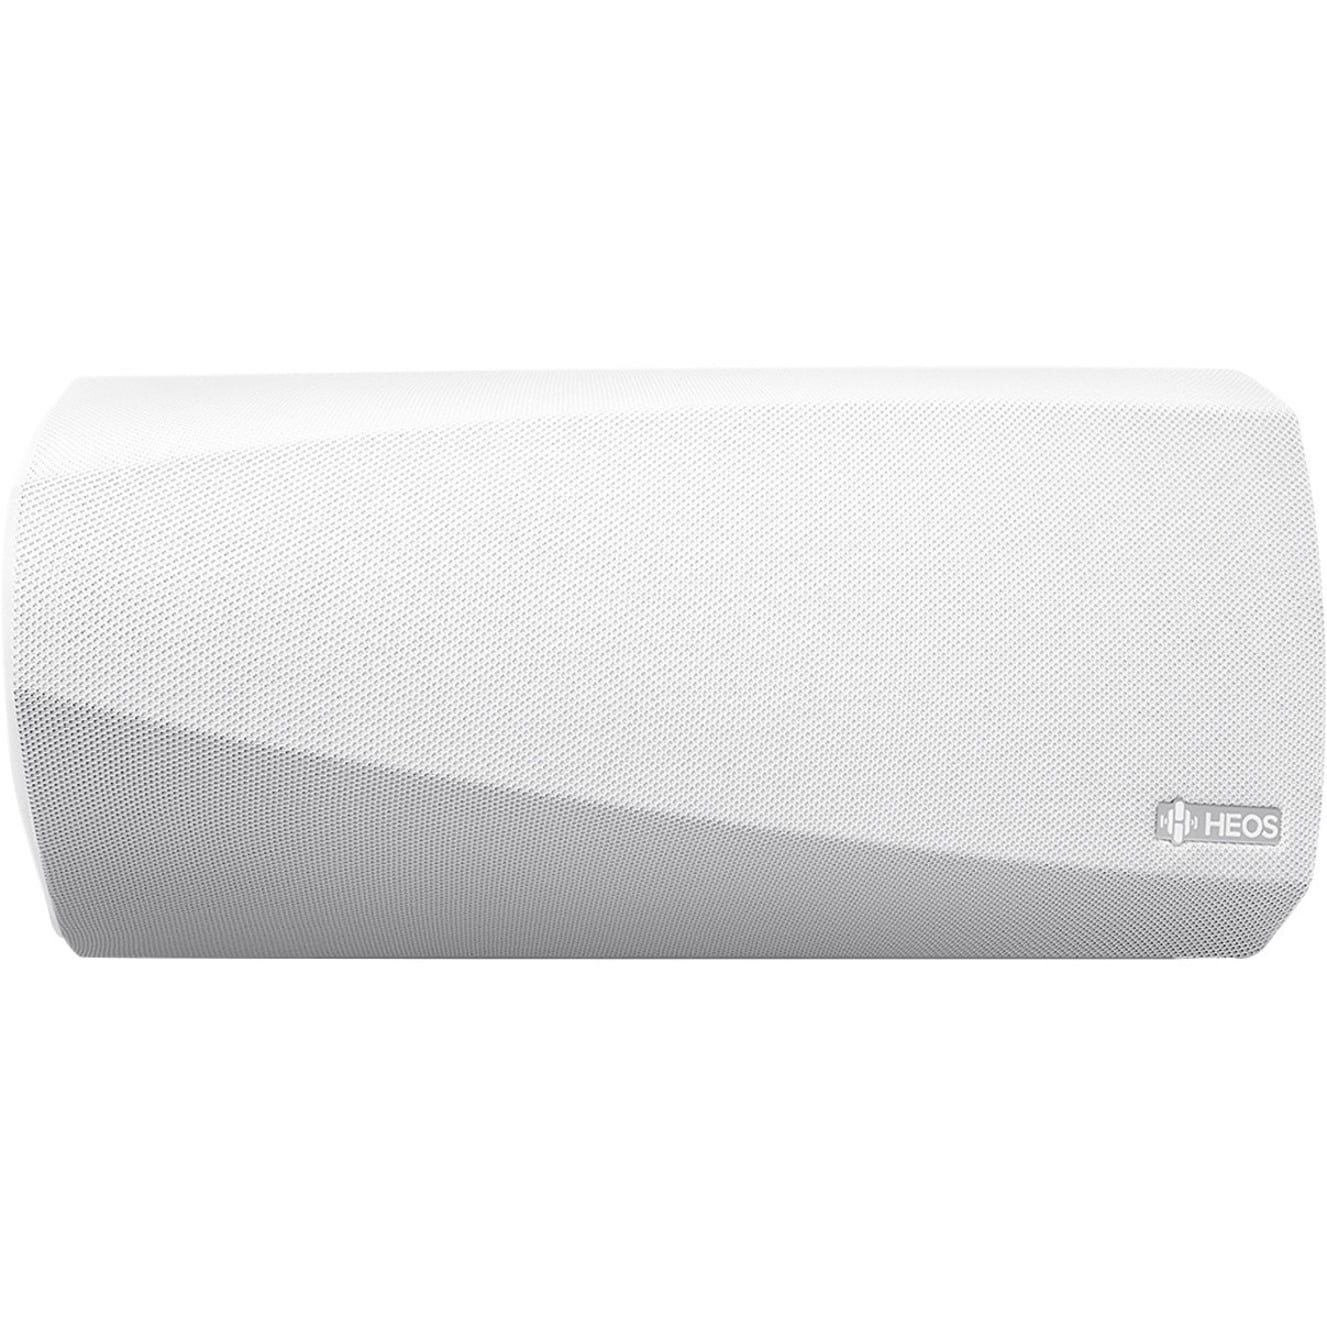 Denon HEOS 3 Bluetooth Speaker System, White Walmart.com